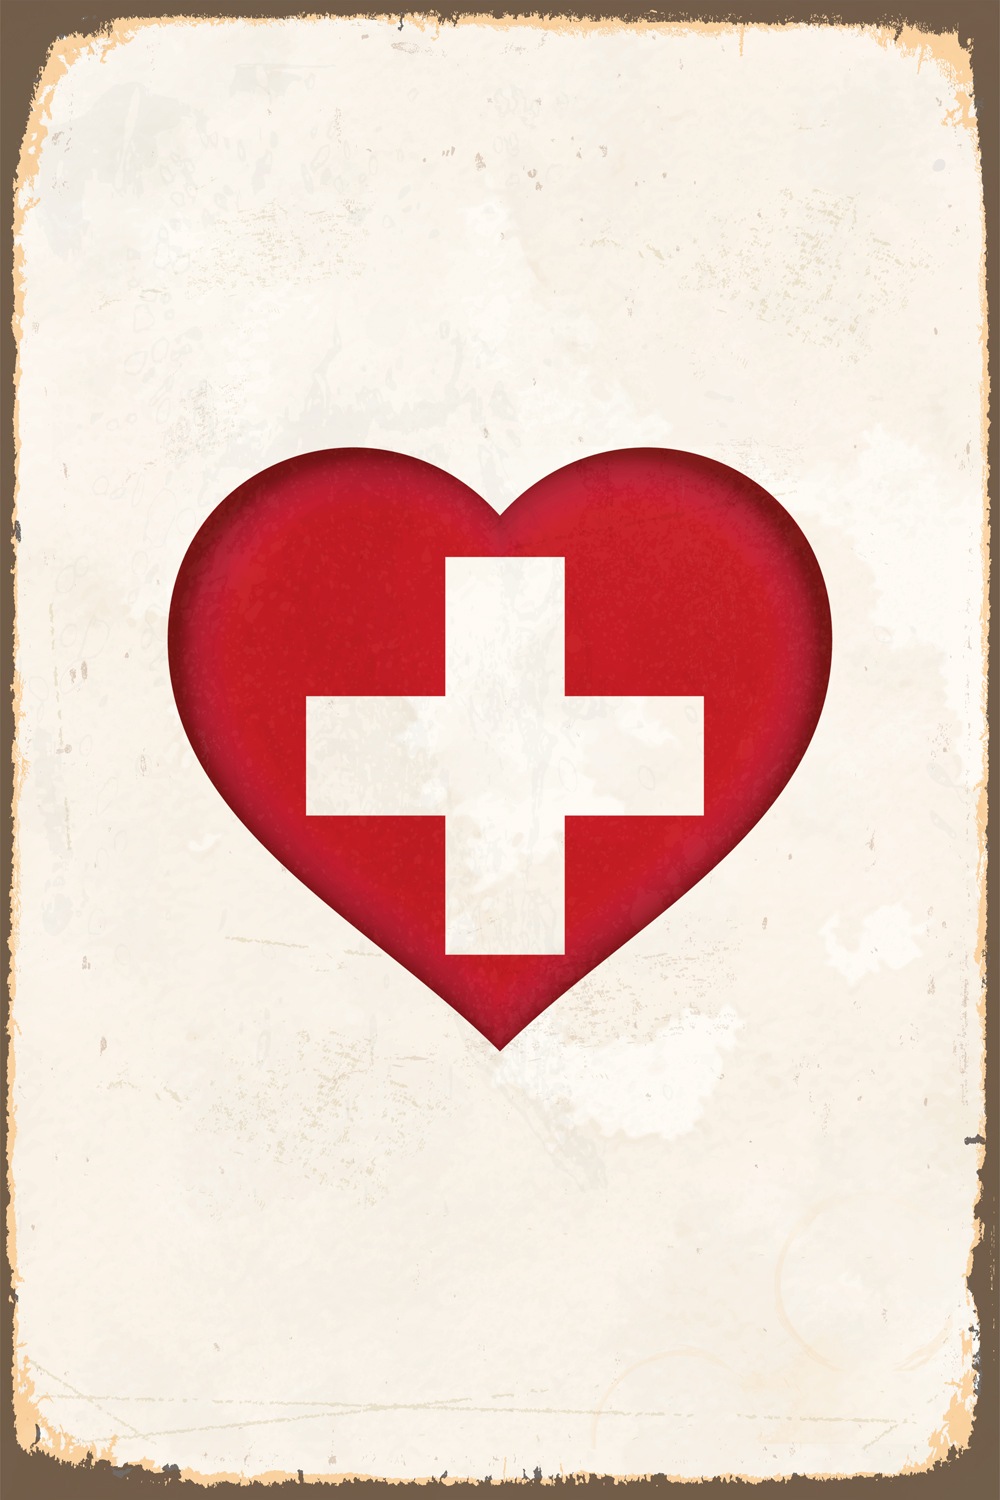 queence Metallbild "Heart for Switzerland", Schweiz, Blechschilder